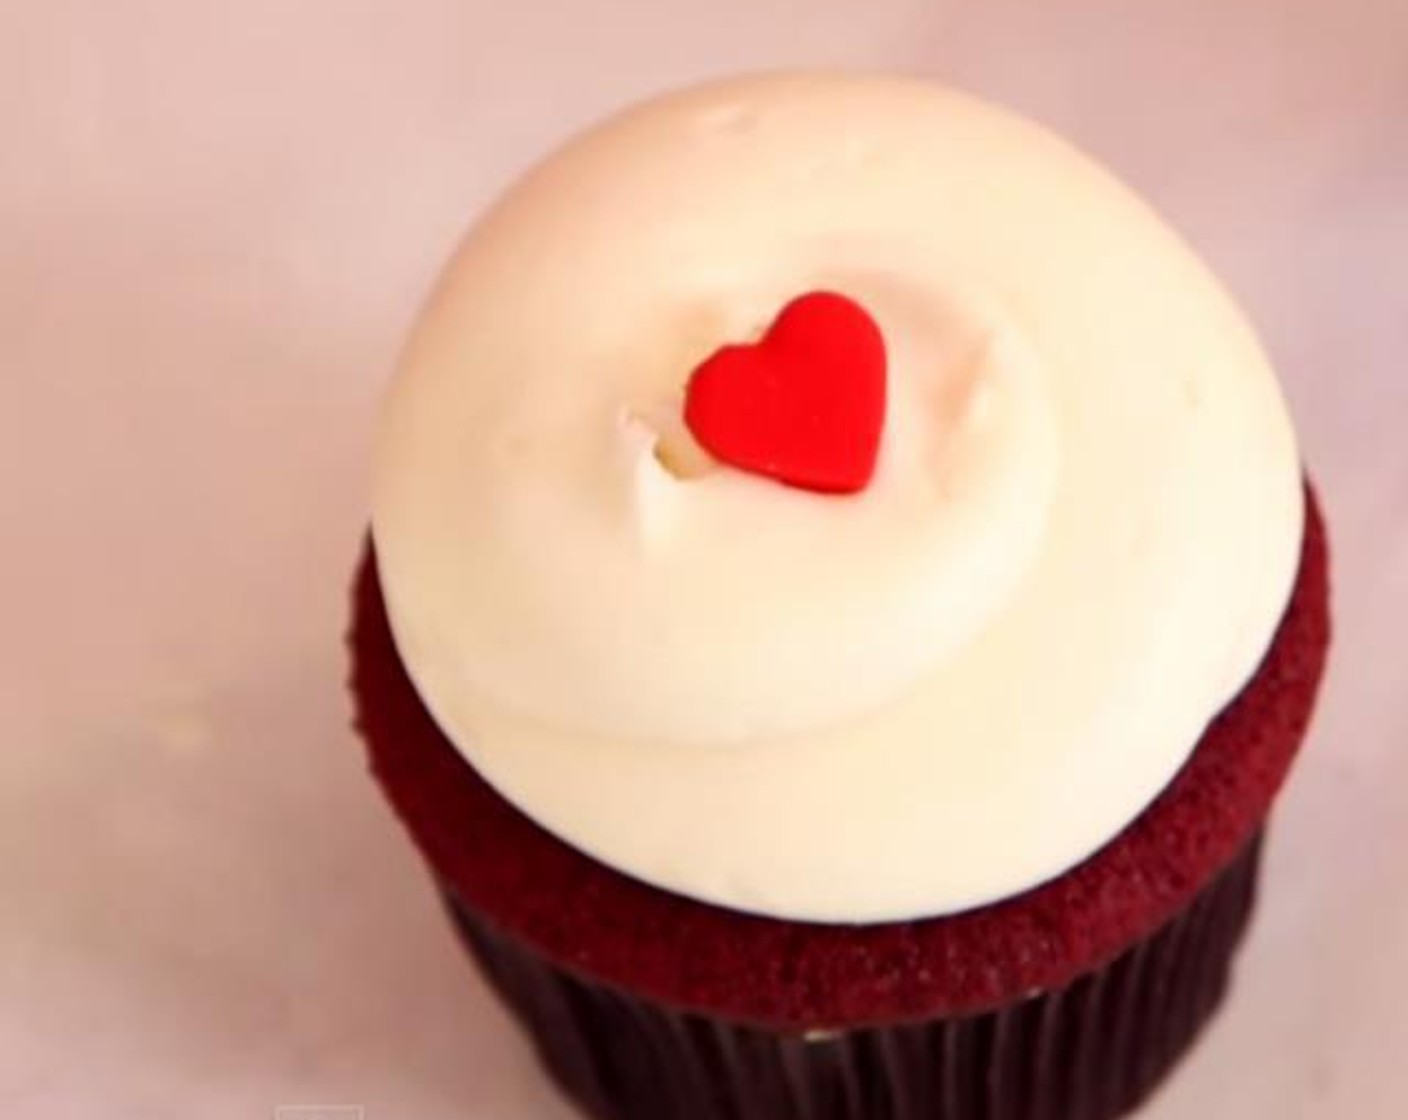 Georgetown Cupcake's Red Velvet Cupcake